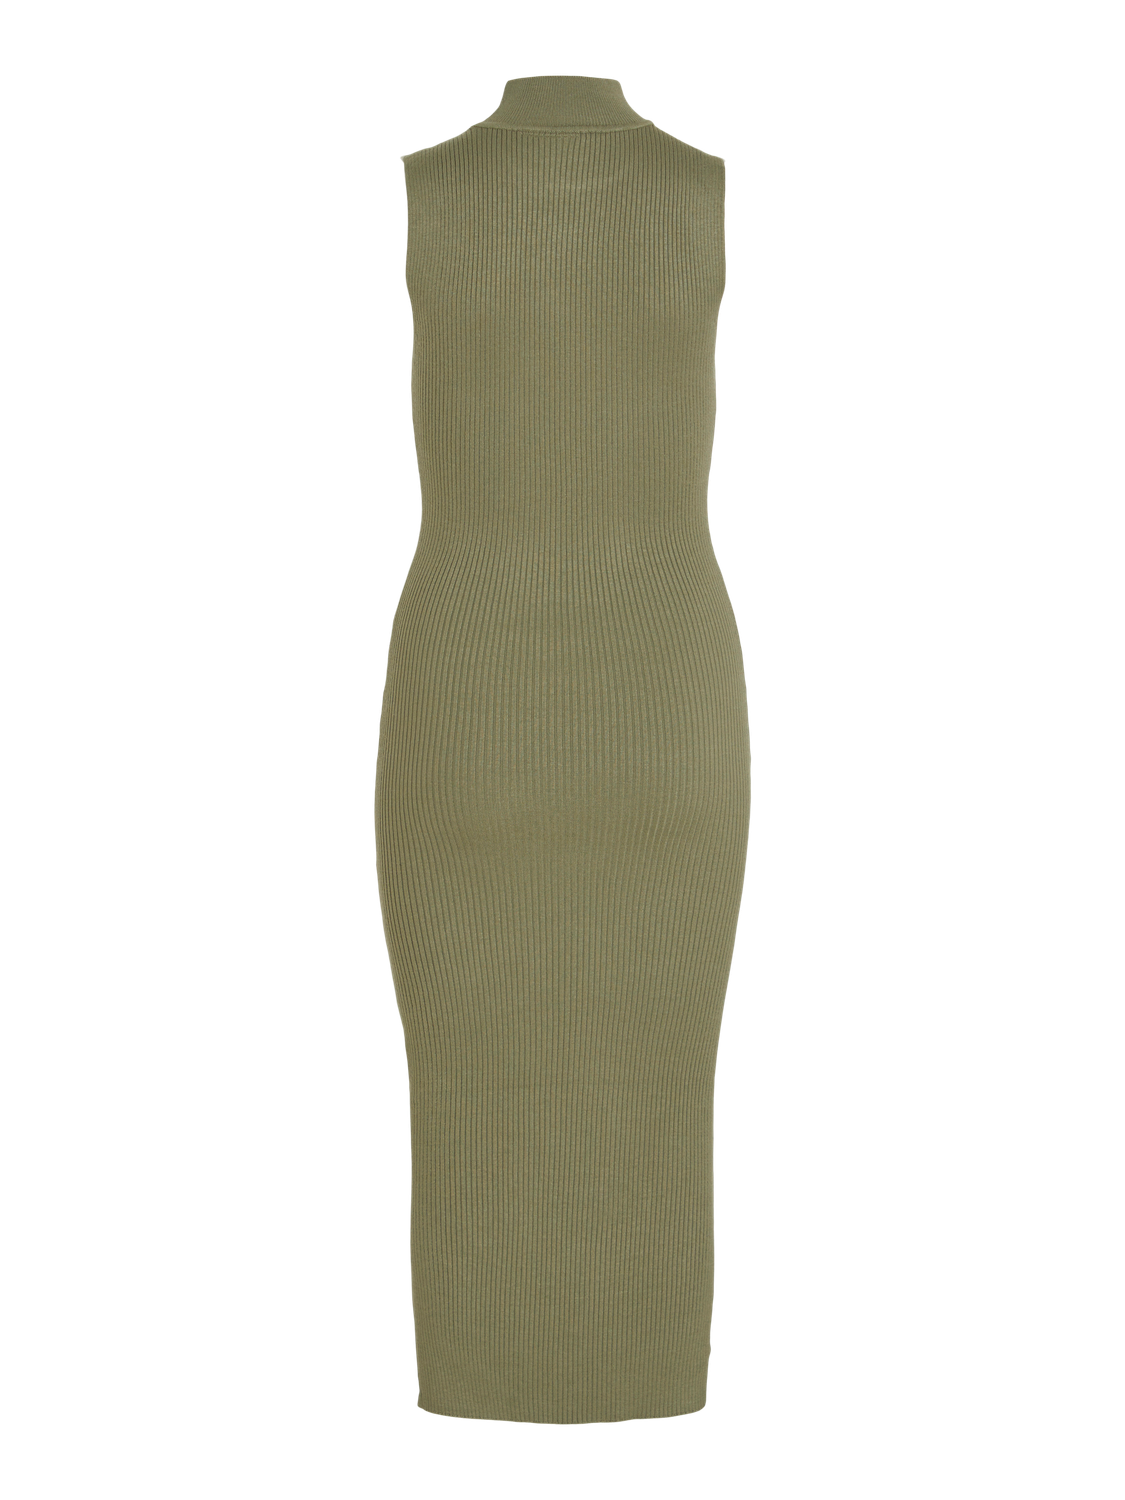 VISTYLIE Dress - Oil Green